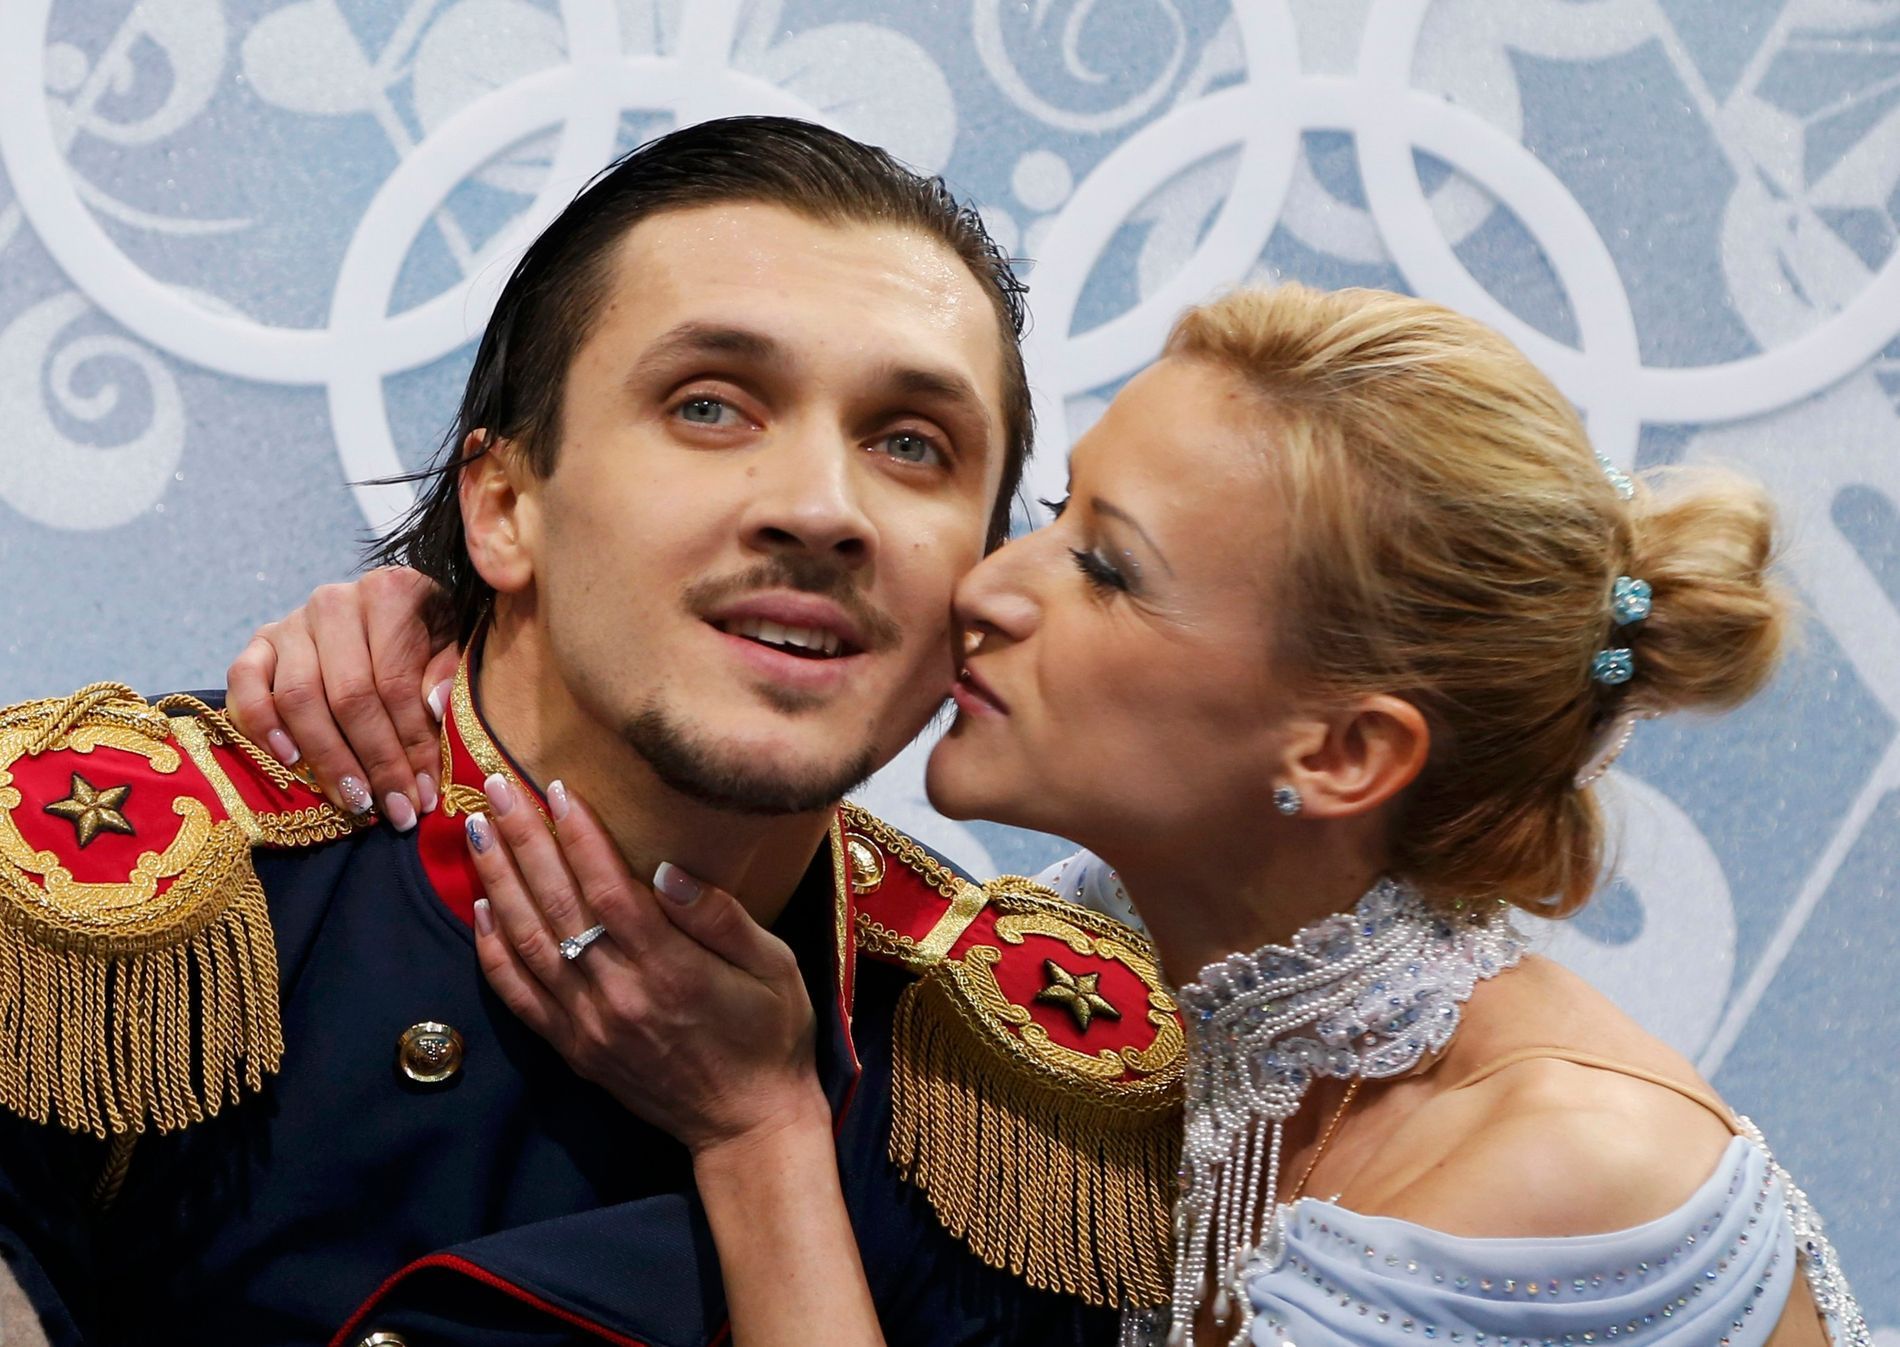 Russia's Tatiana Volosozhar kisses Maxim Trankov during the Figure Skating Pairs Short Program at the Sochi 2014 Winter Olympics